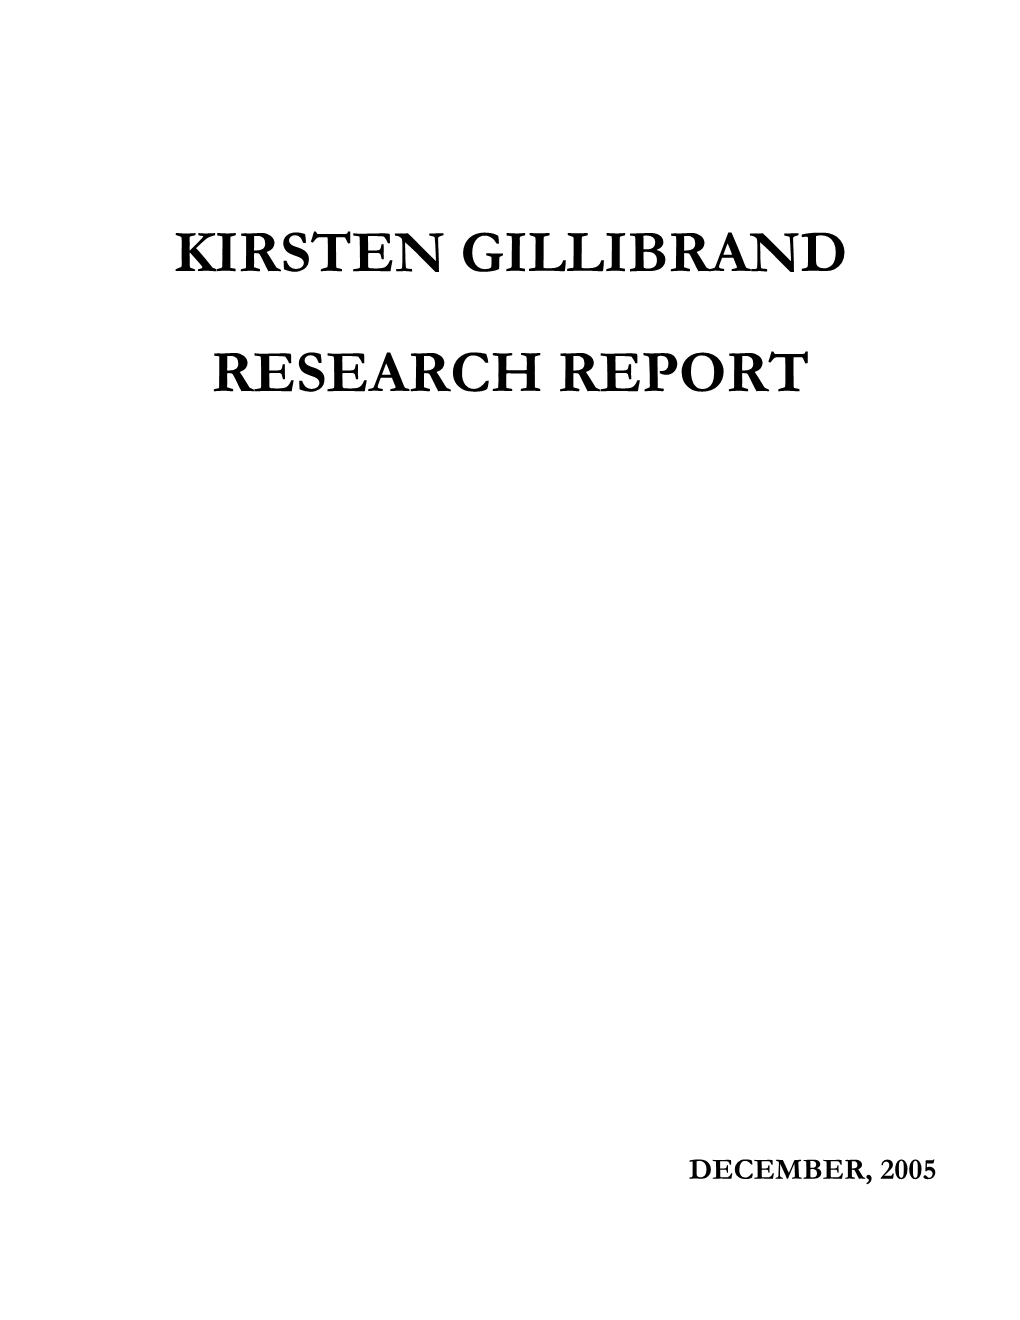 Kirsten Gillibrand Research Report